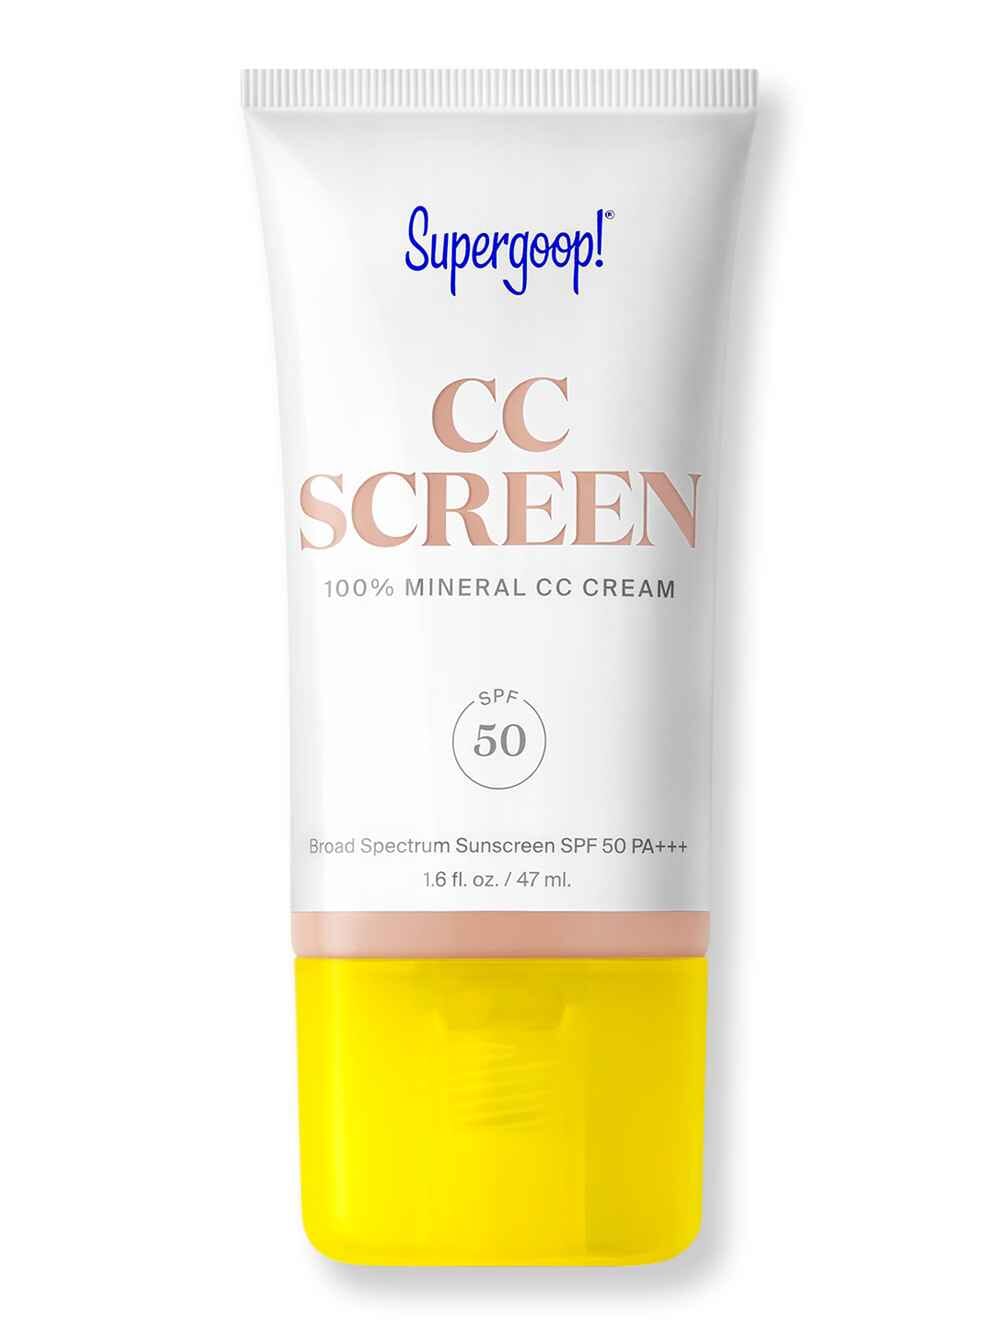 Supergoop Supergoop CC Screen 100% Mineral CC Cream SPF 50 1.6 fl oz47 ml110C Fair with Cool Undertones BB & CC Creams 